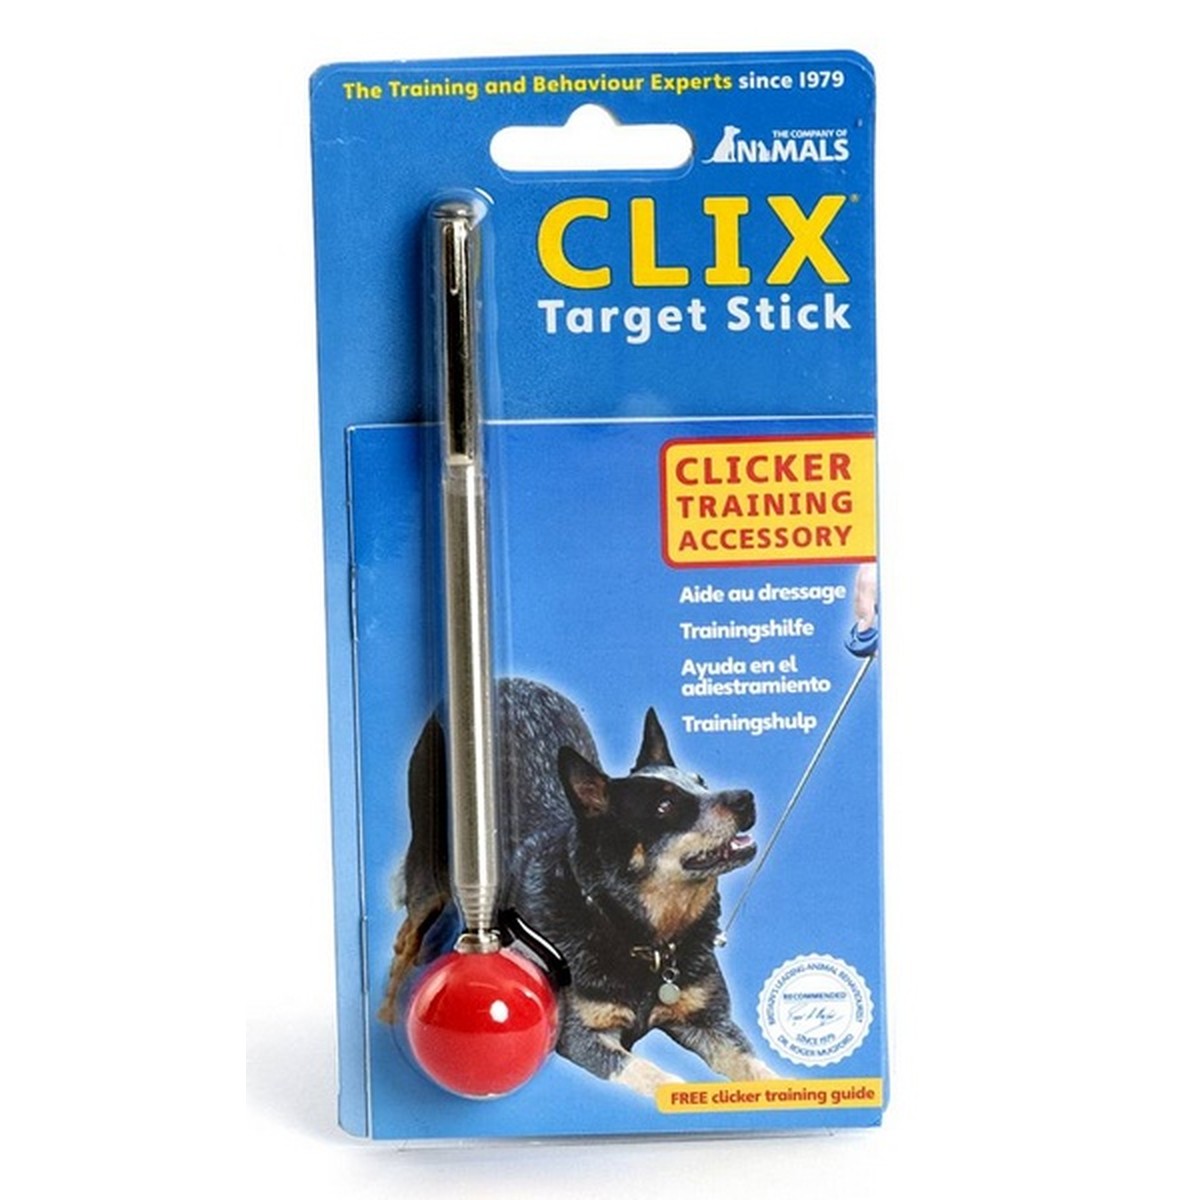   CLIX Target Stick  14 - 70 cm